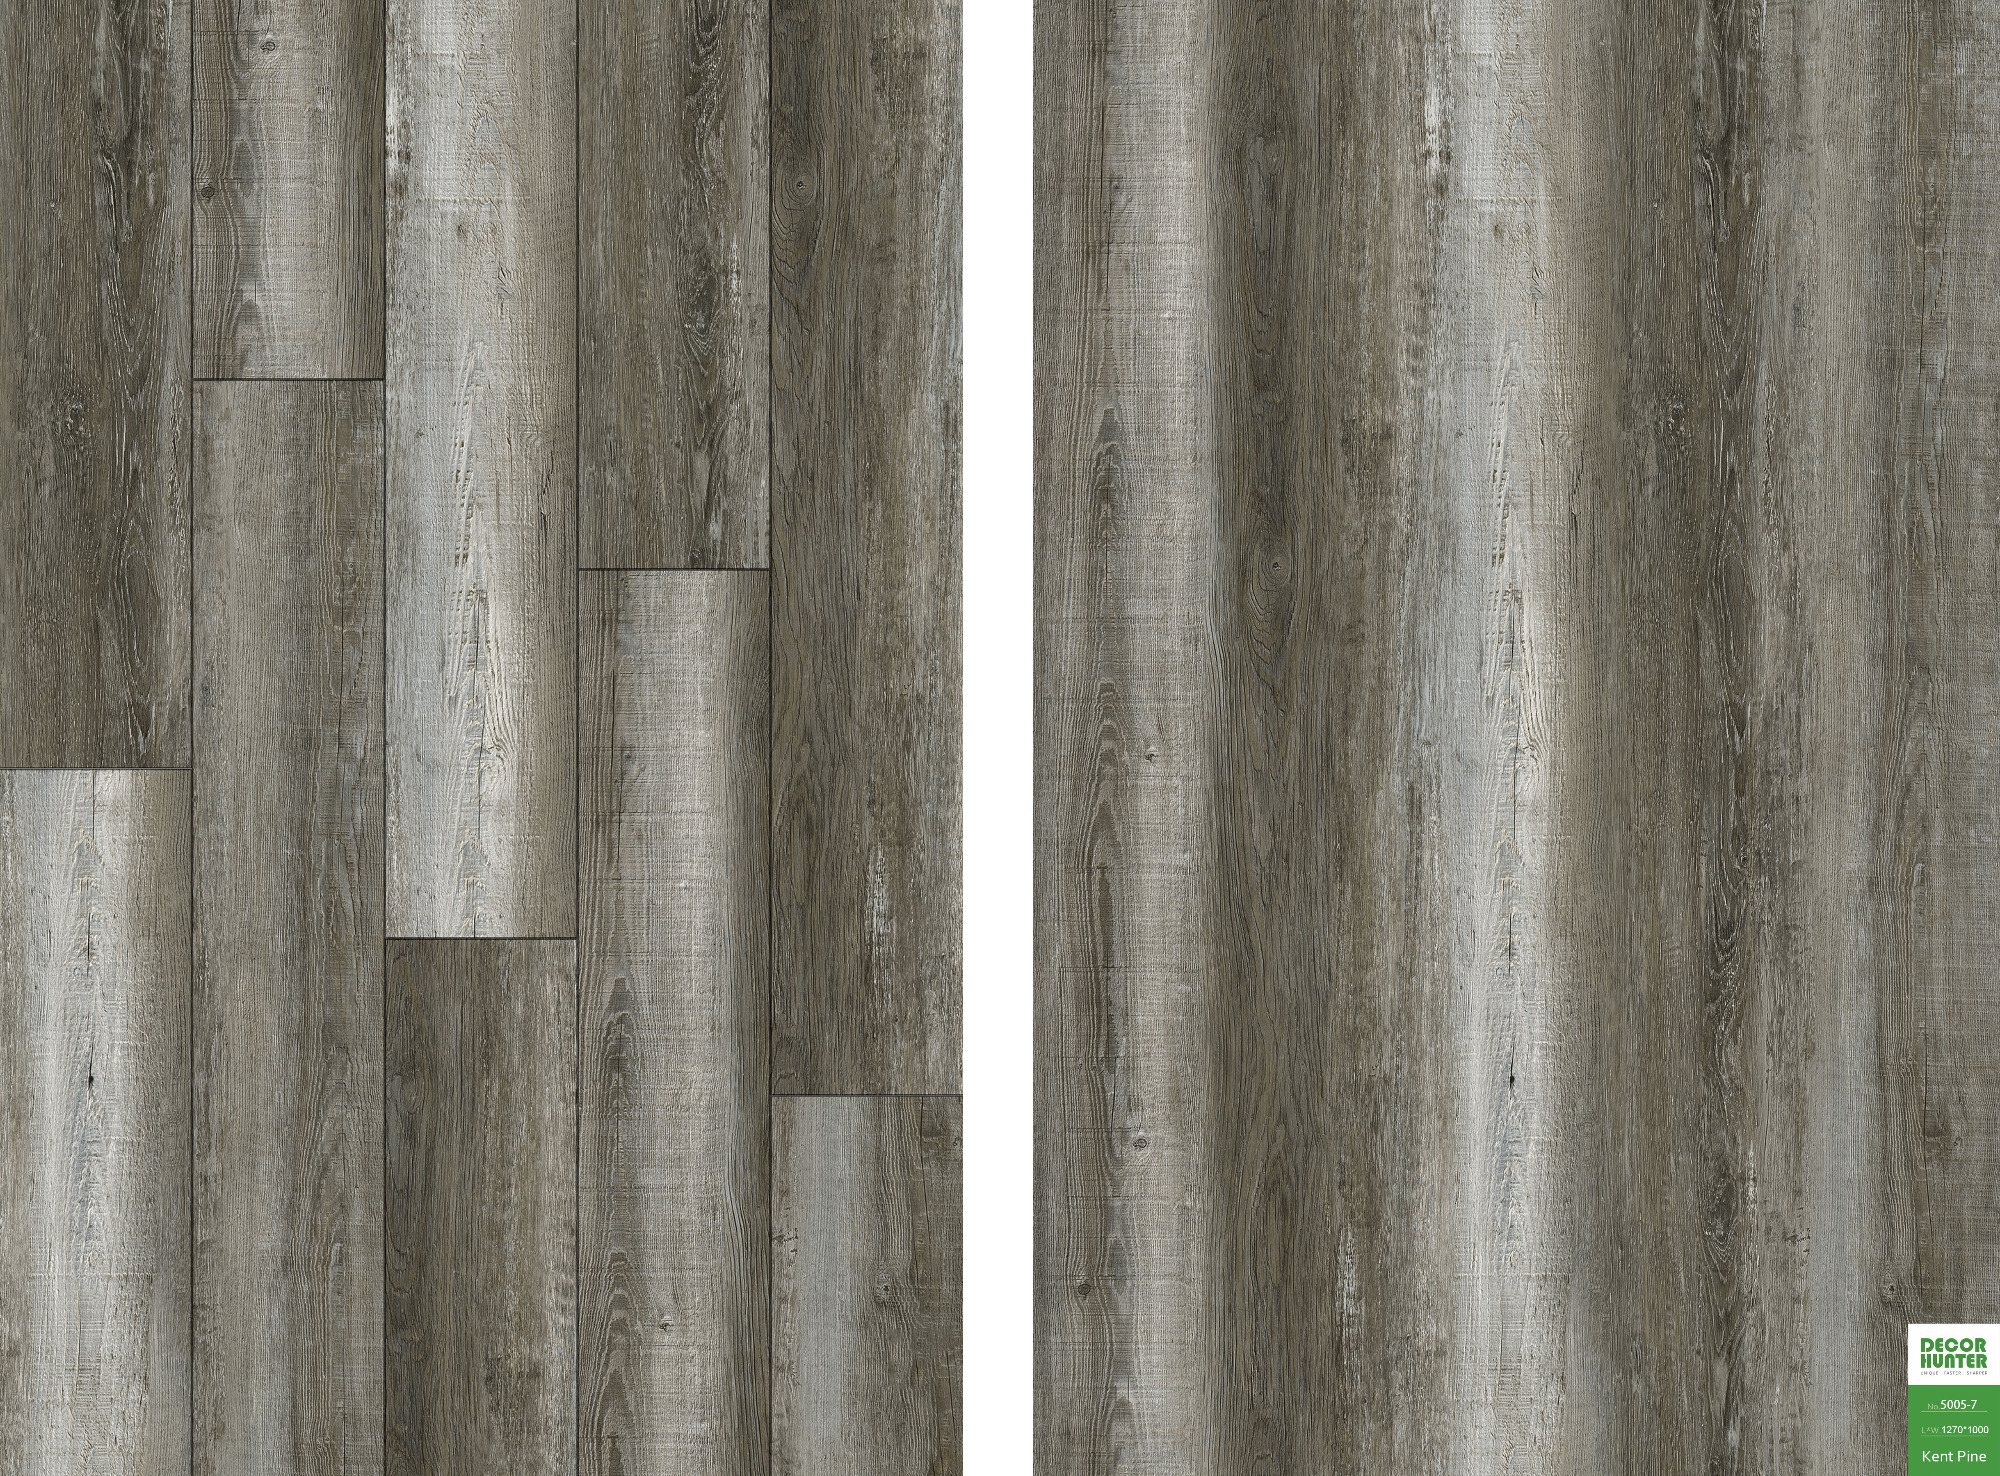 5005 Kent Pine｜Wood Grain Vinyl Flooring Film